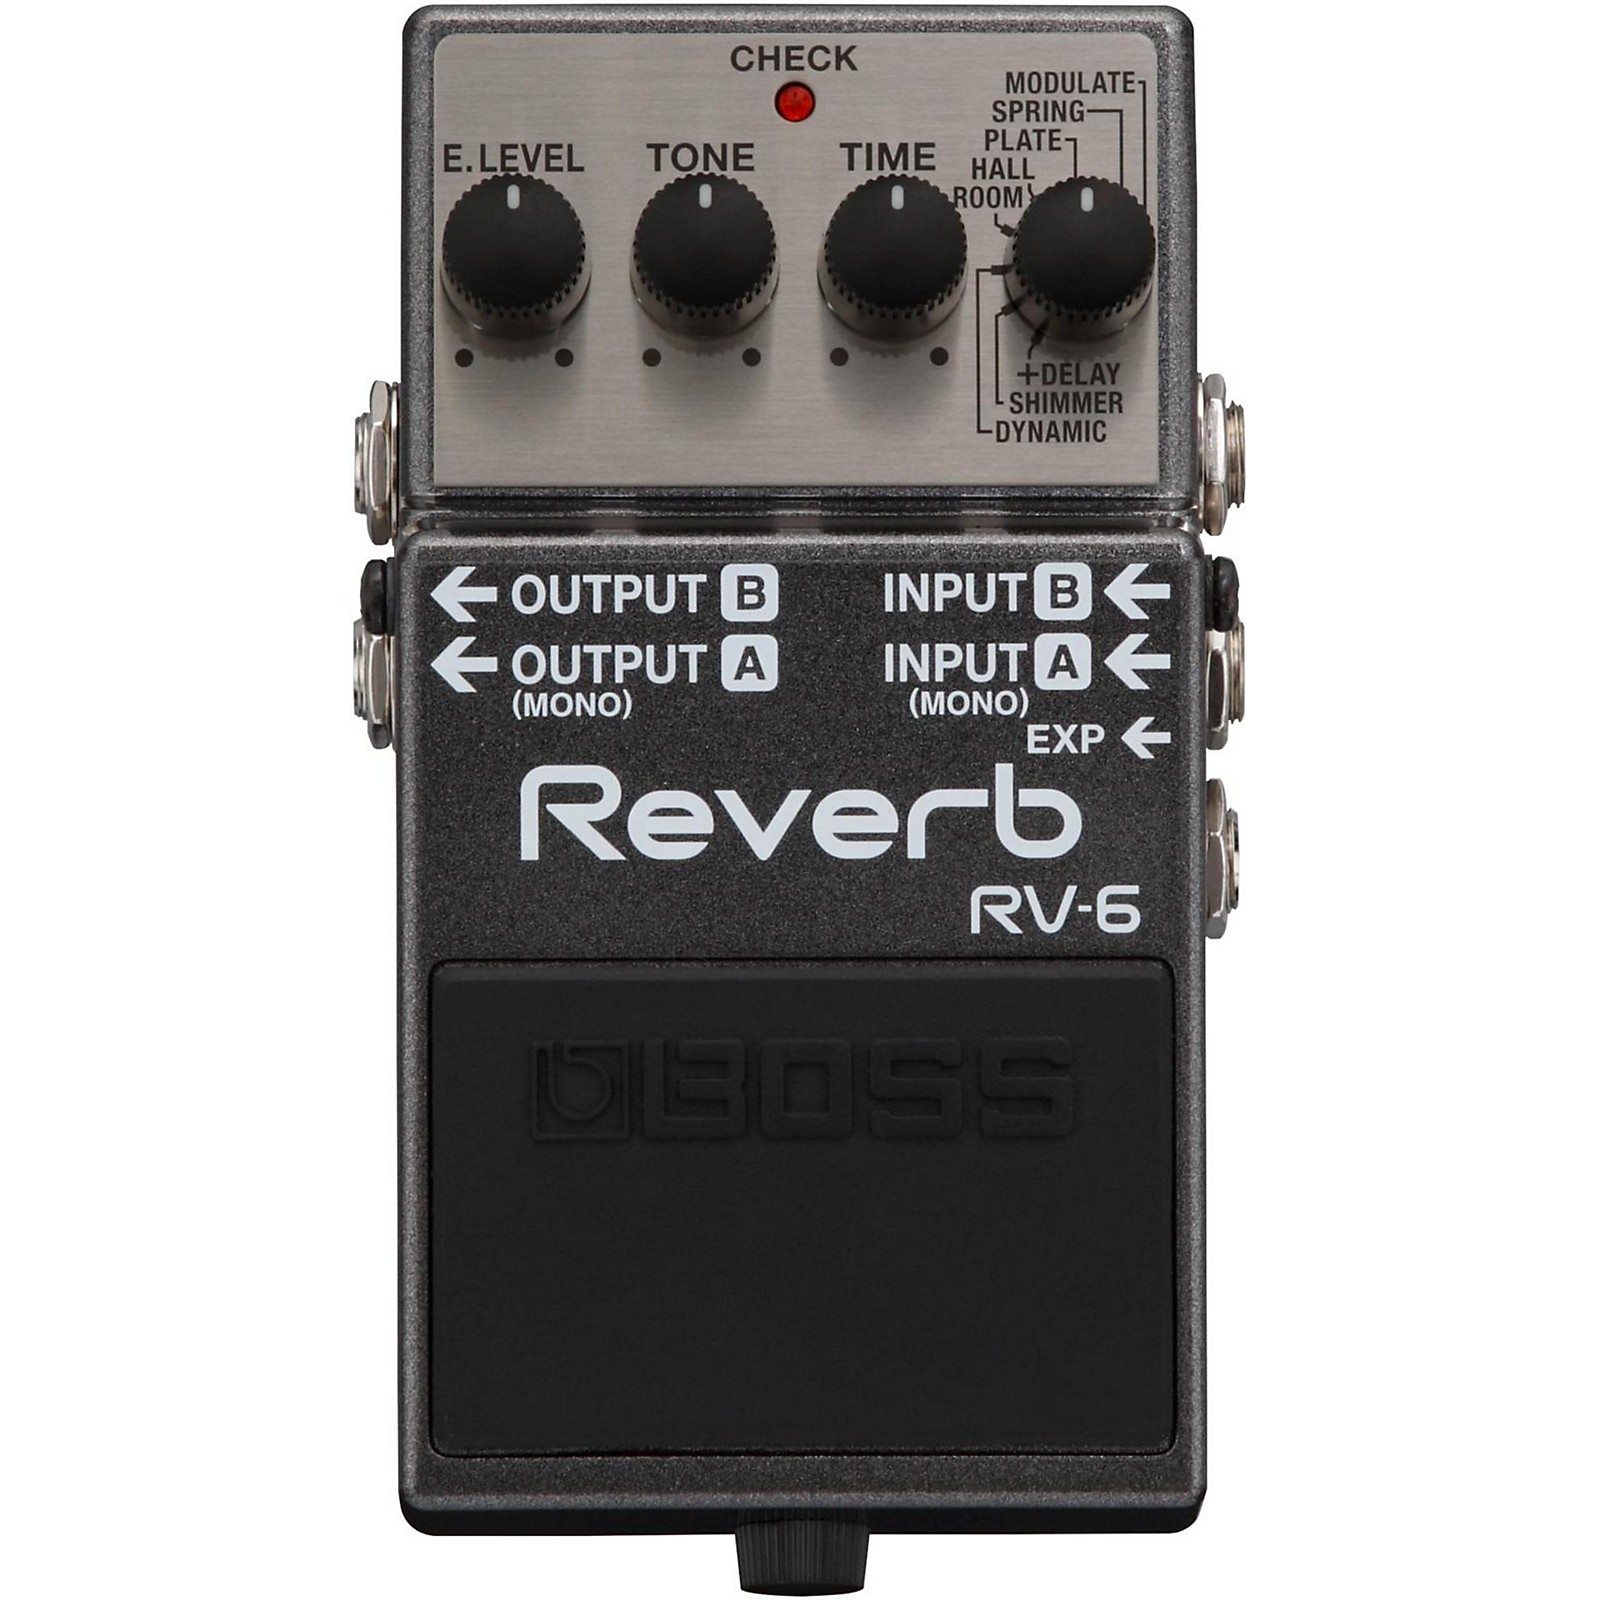 BOSS RV-6 Digital Delay/Reverb Guitar Effects Pedal | Music & Arts